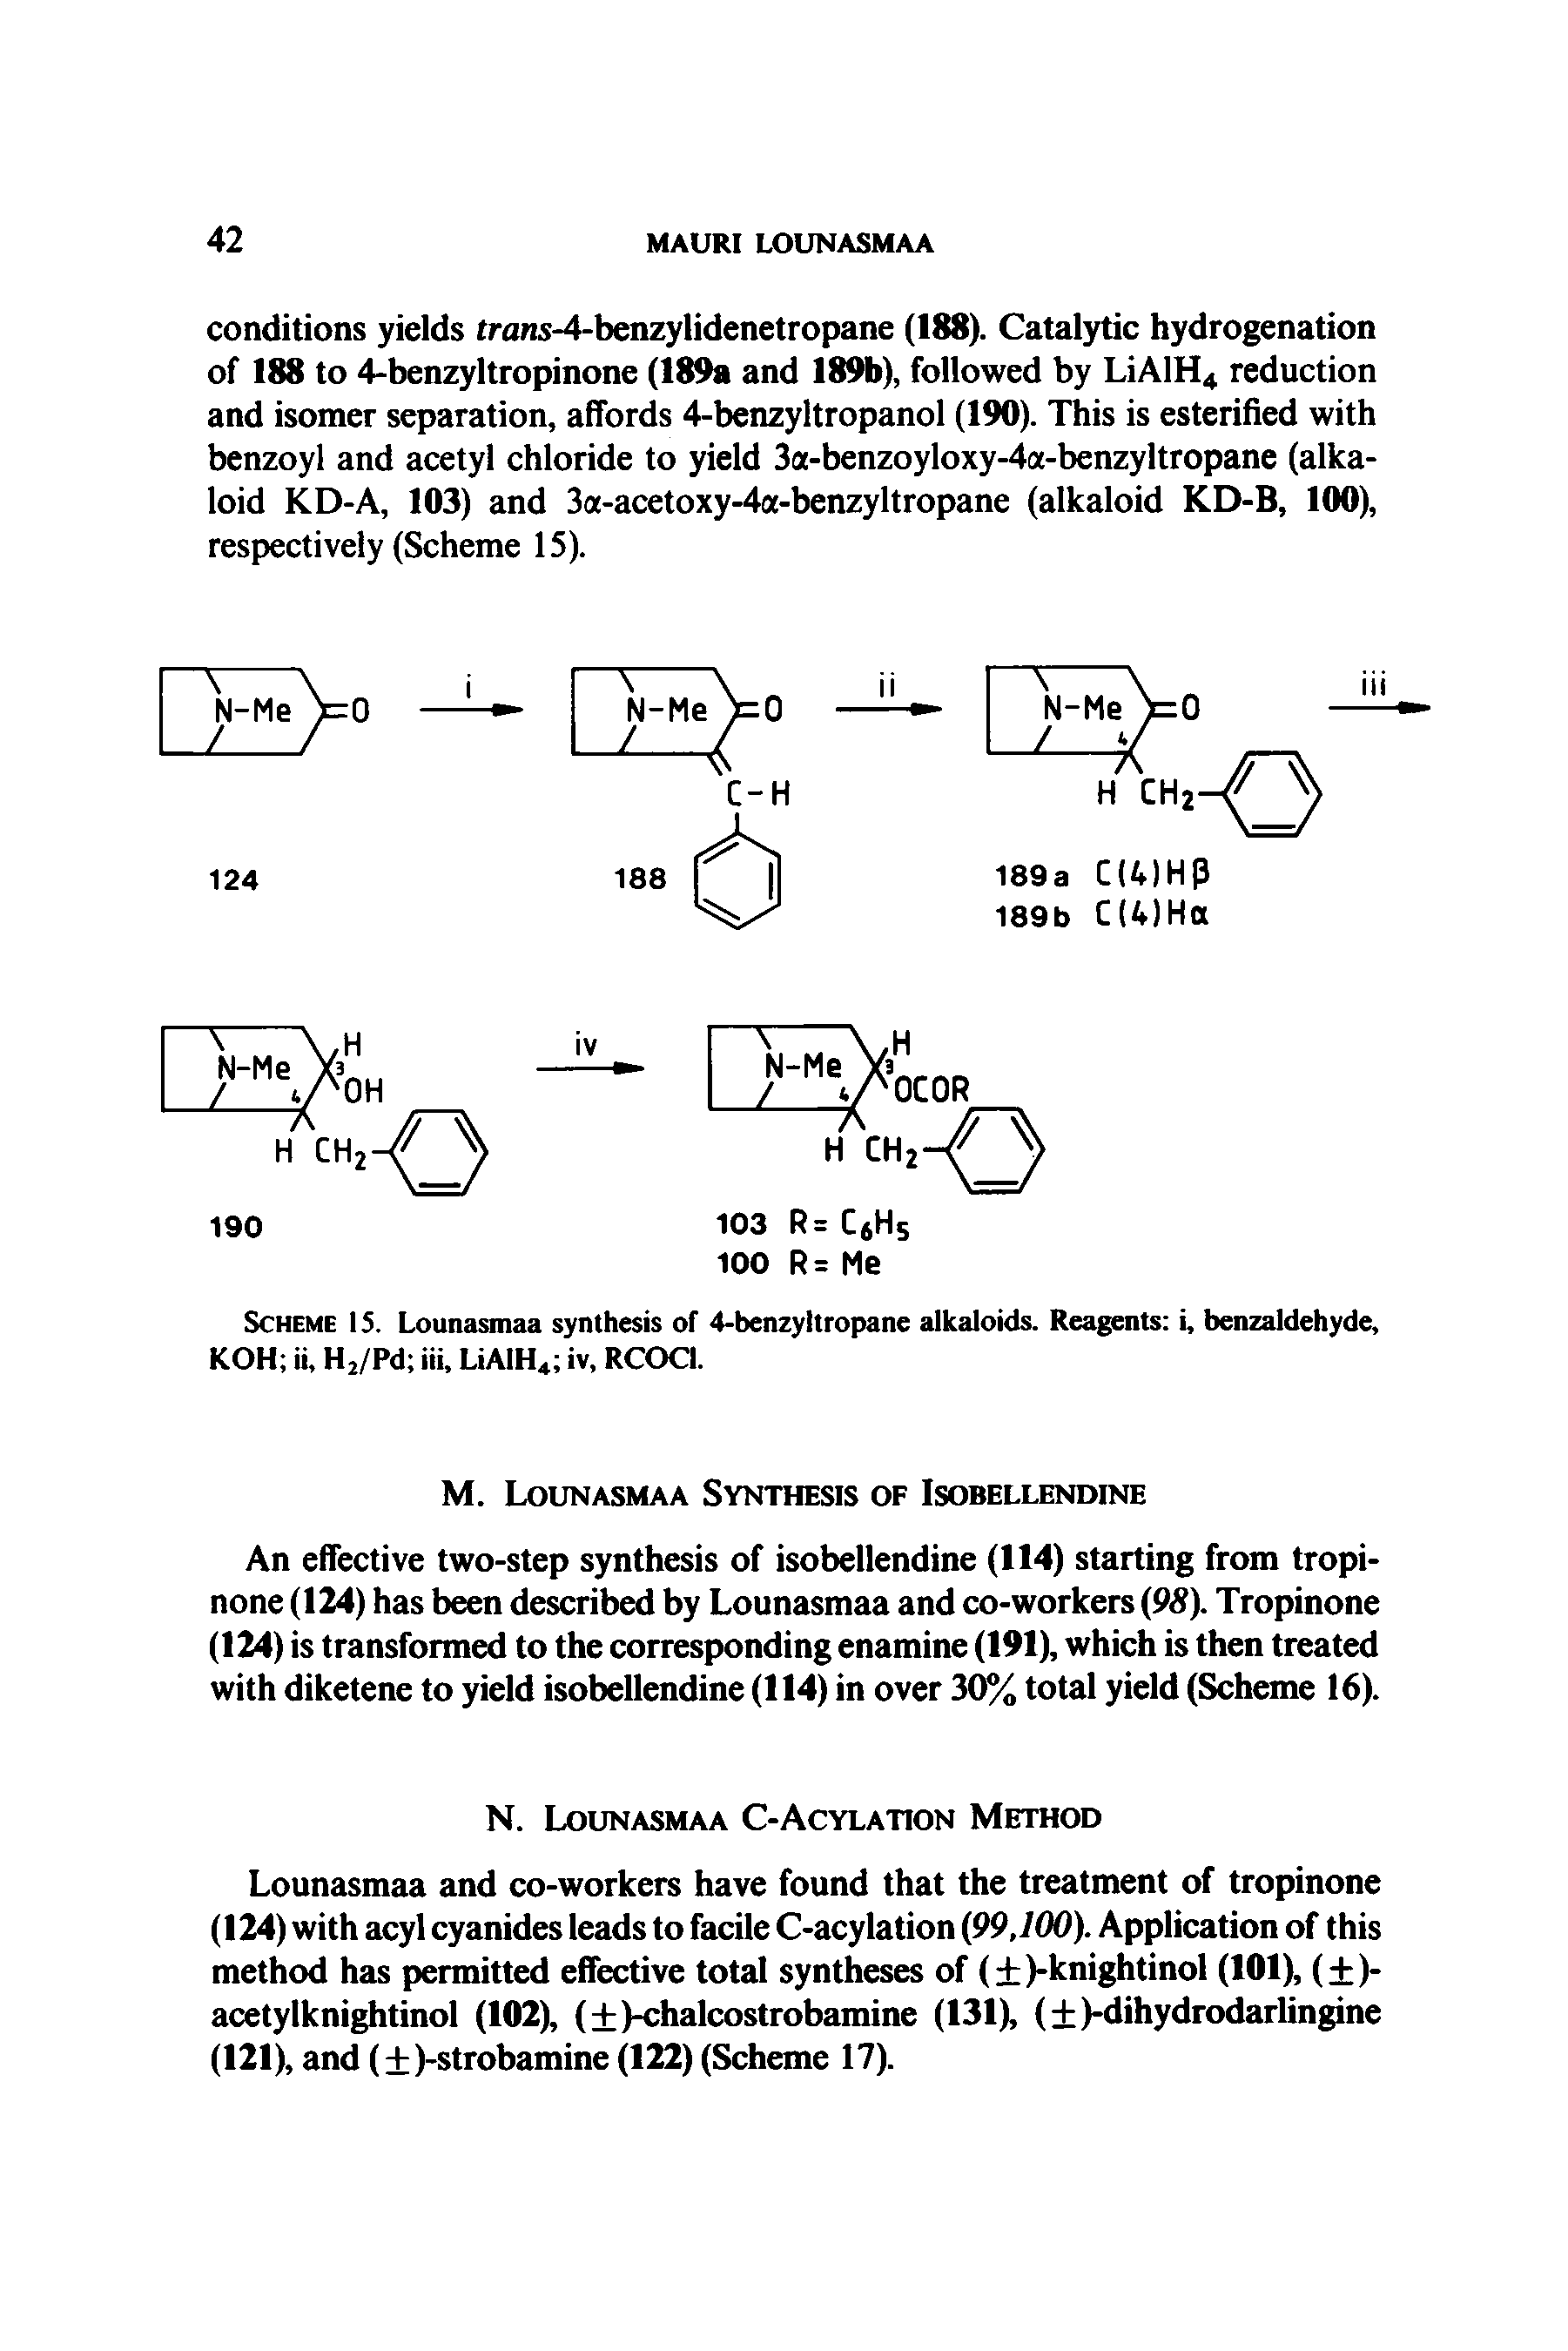 Scheme IS. Lounasmaa synthesis of 4-benzyltropane alkaloids. Reagents i, benzaldehyde, KOH ii, H2/Pd iii, LiAIH4 iv, RCOCI.